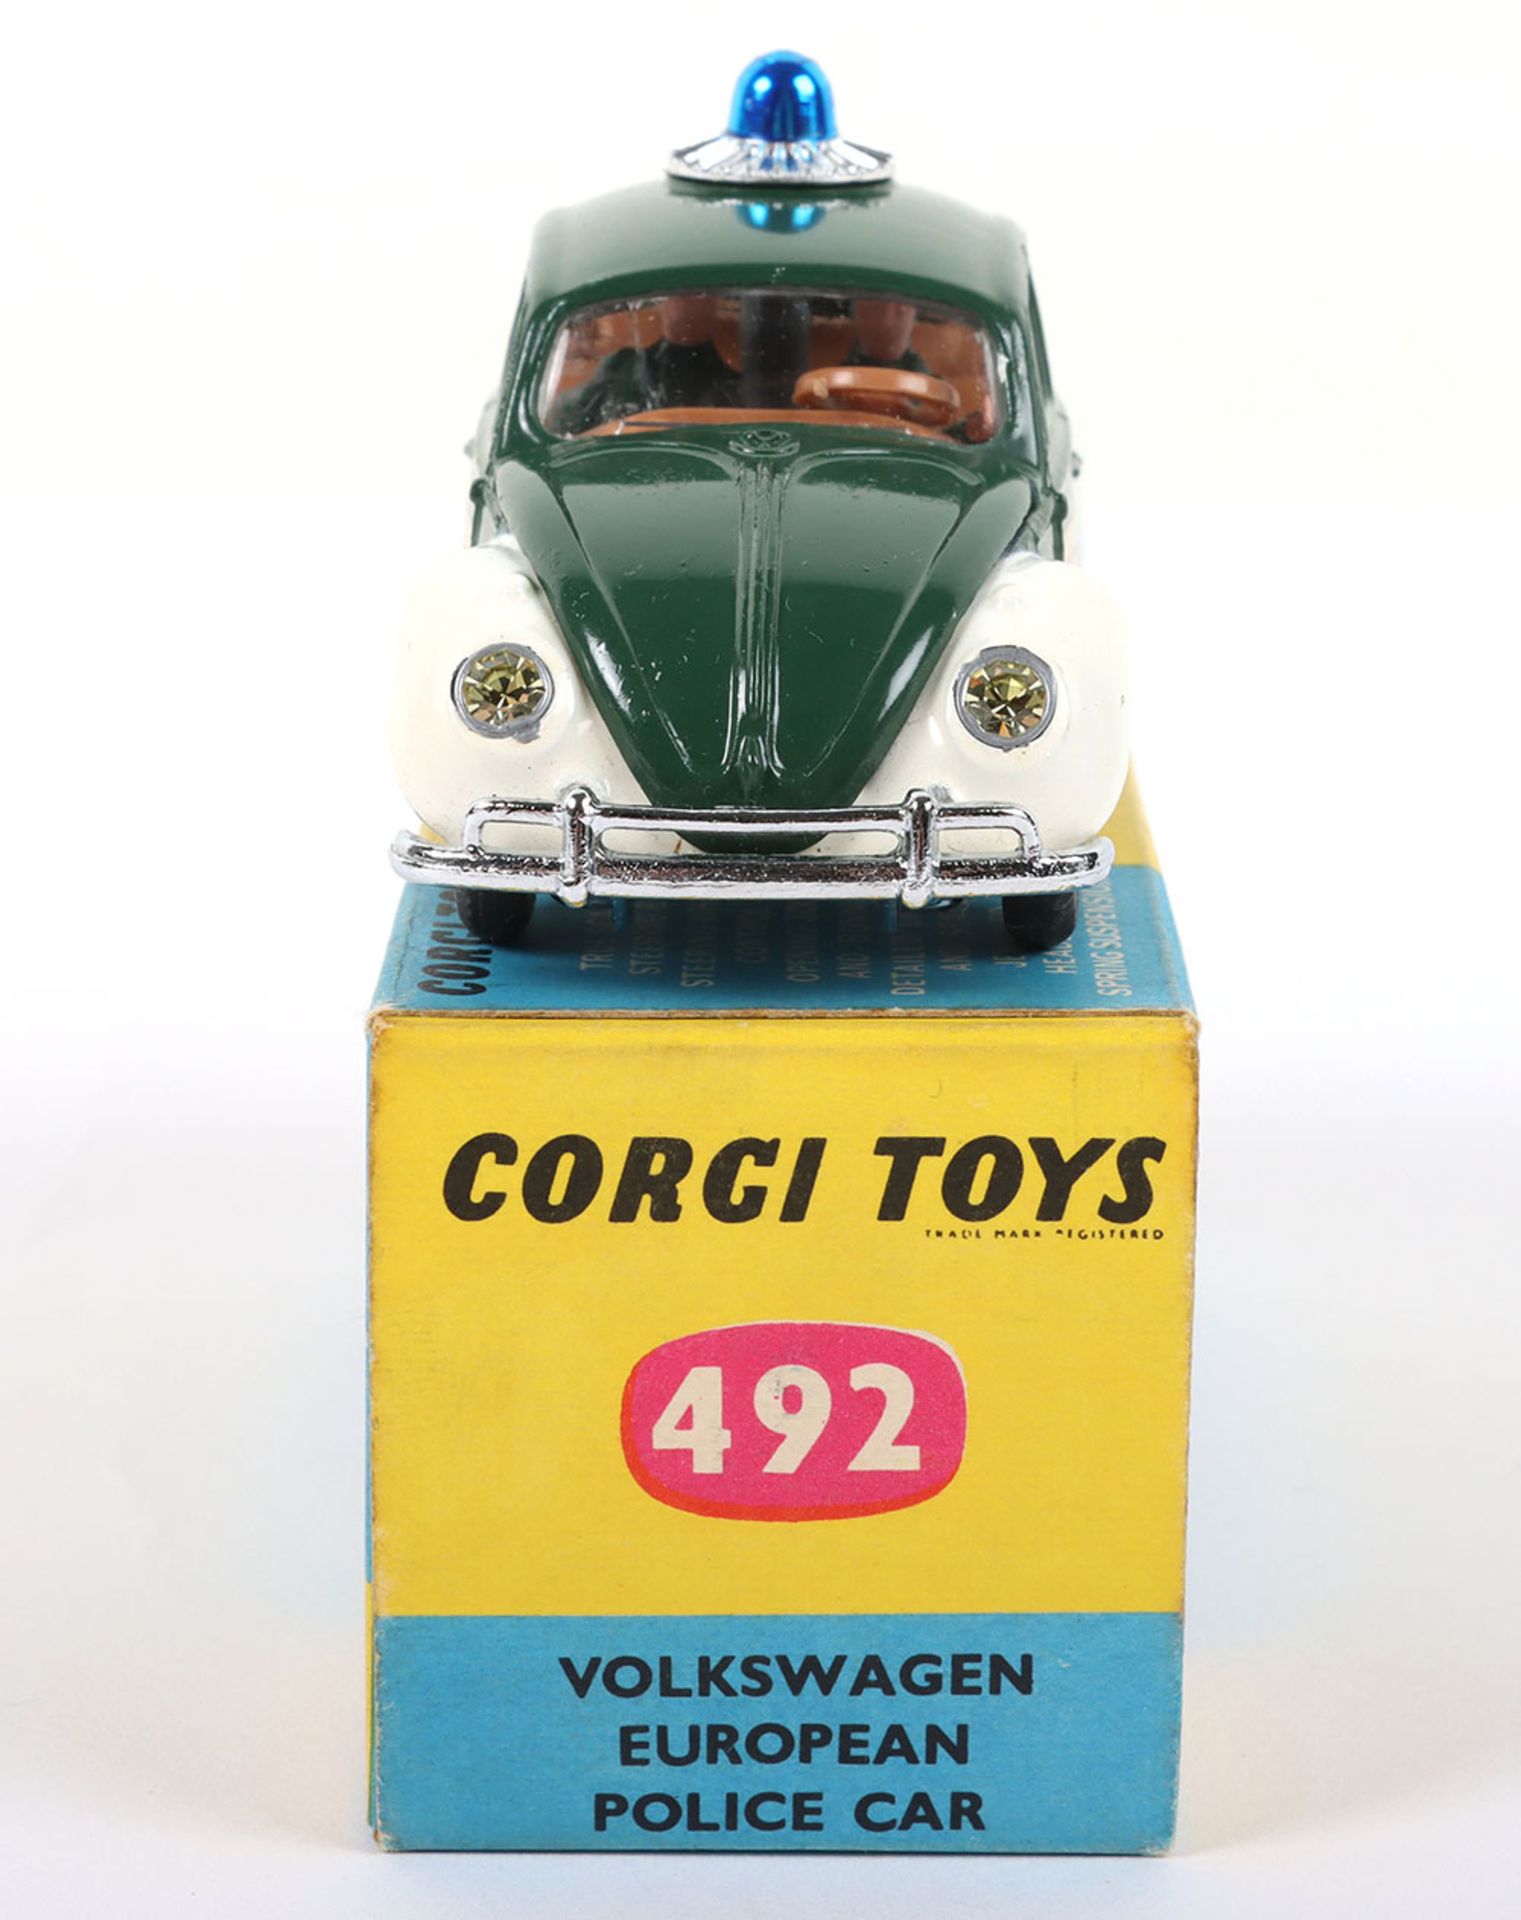 Corgi Toys 492 Volkswagen European Police Car - Image 4 of 6